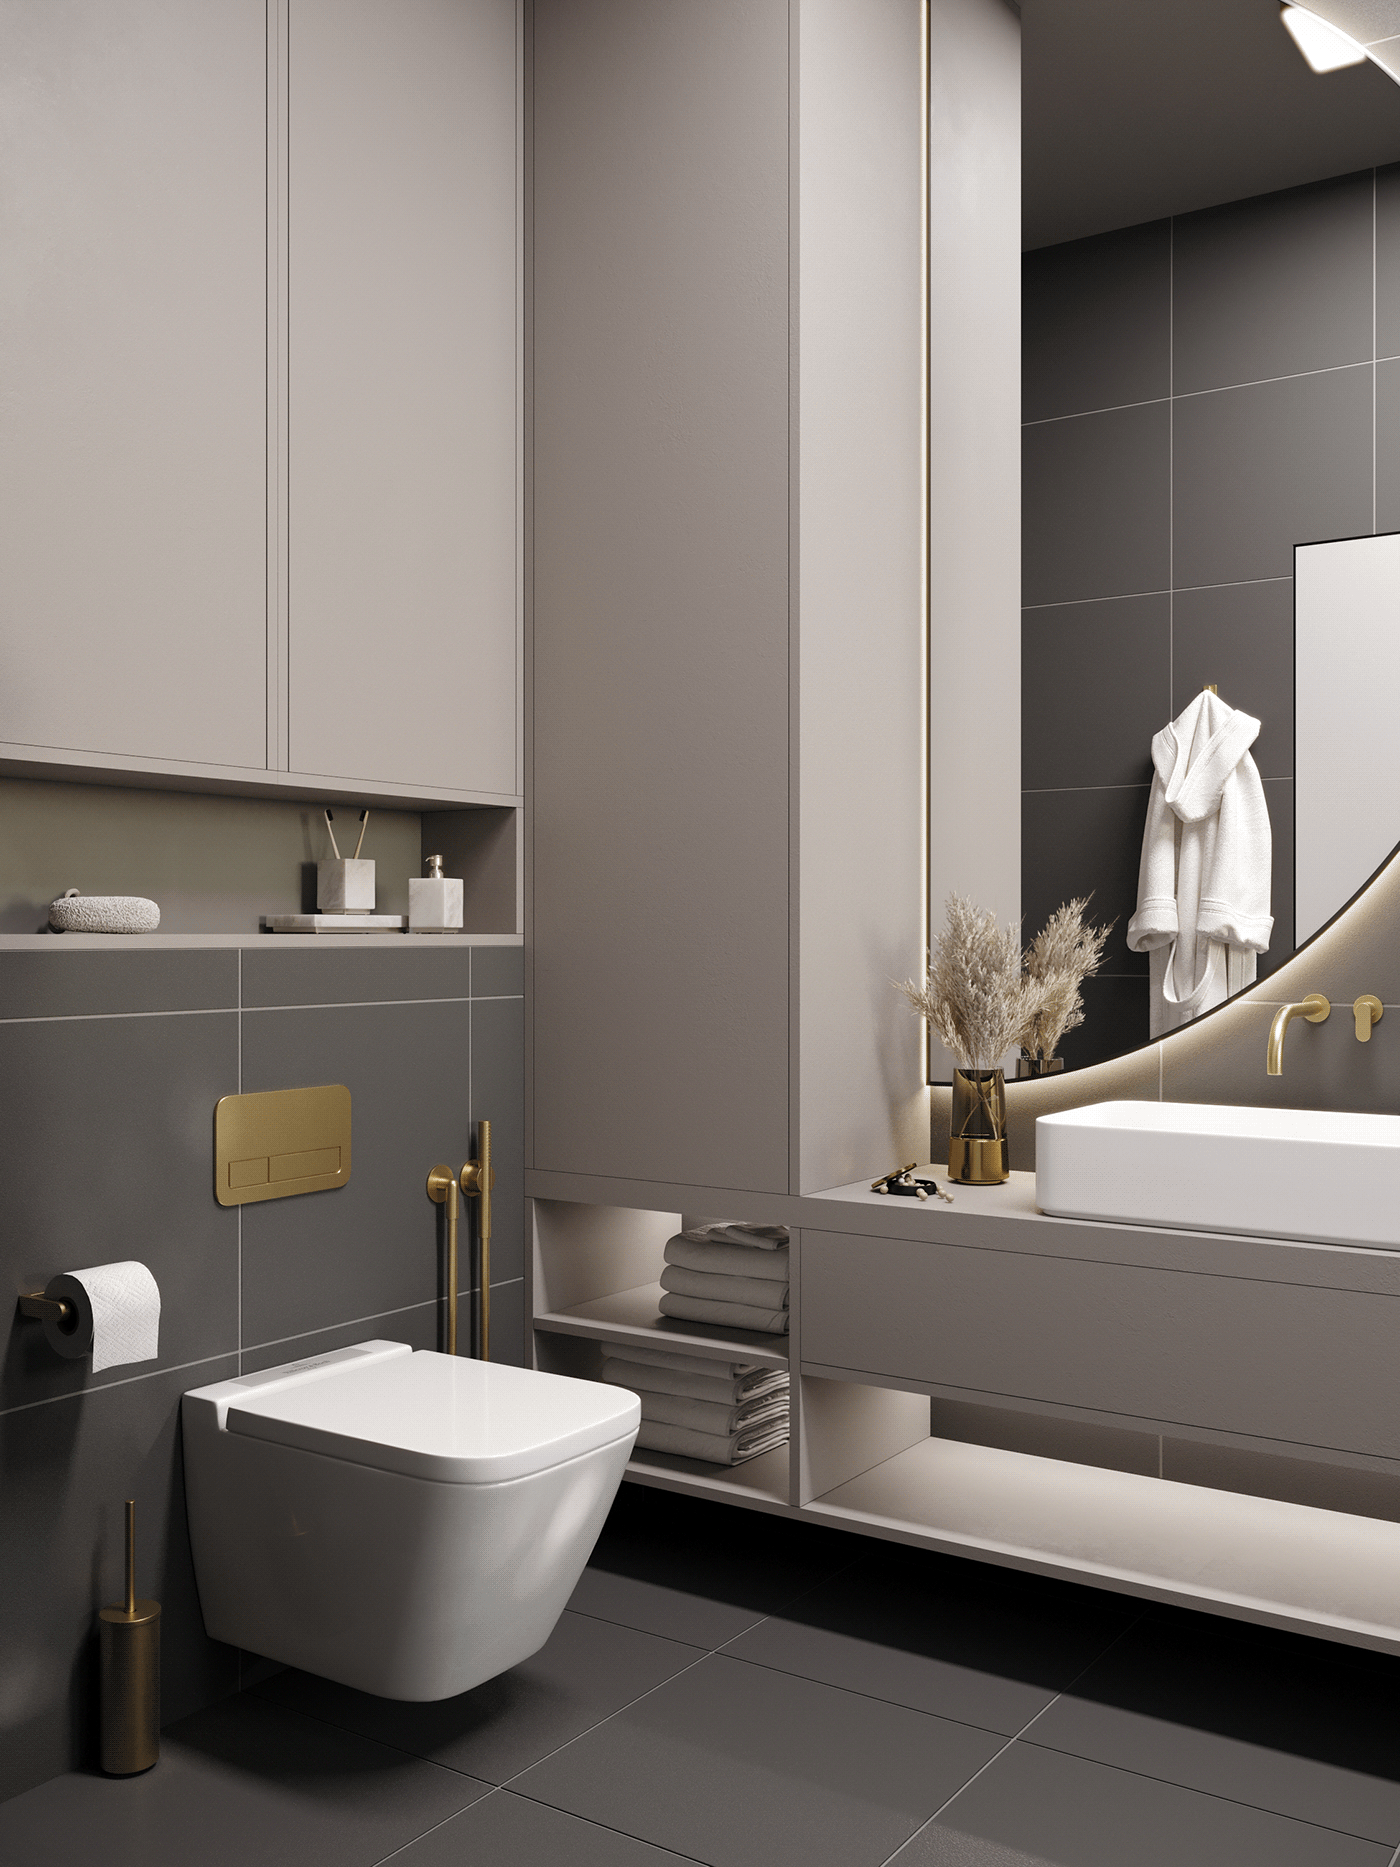 3ds max archviz bathroom bathroom design CGI design Interior interior design  Render visualization